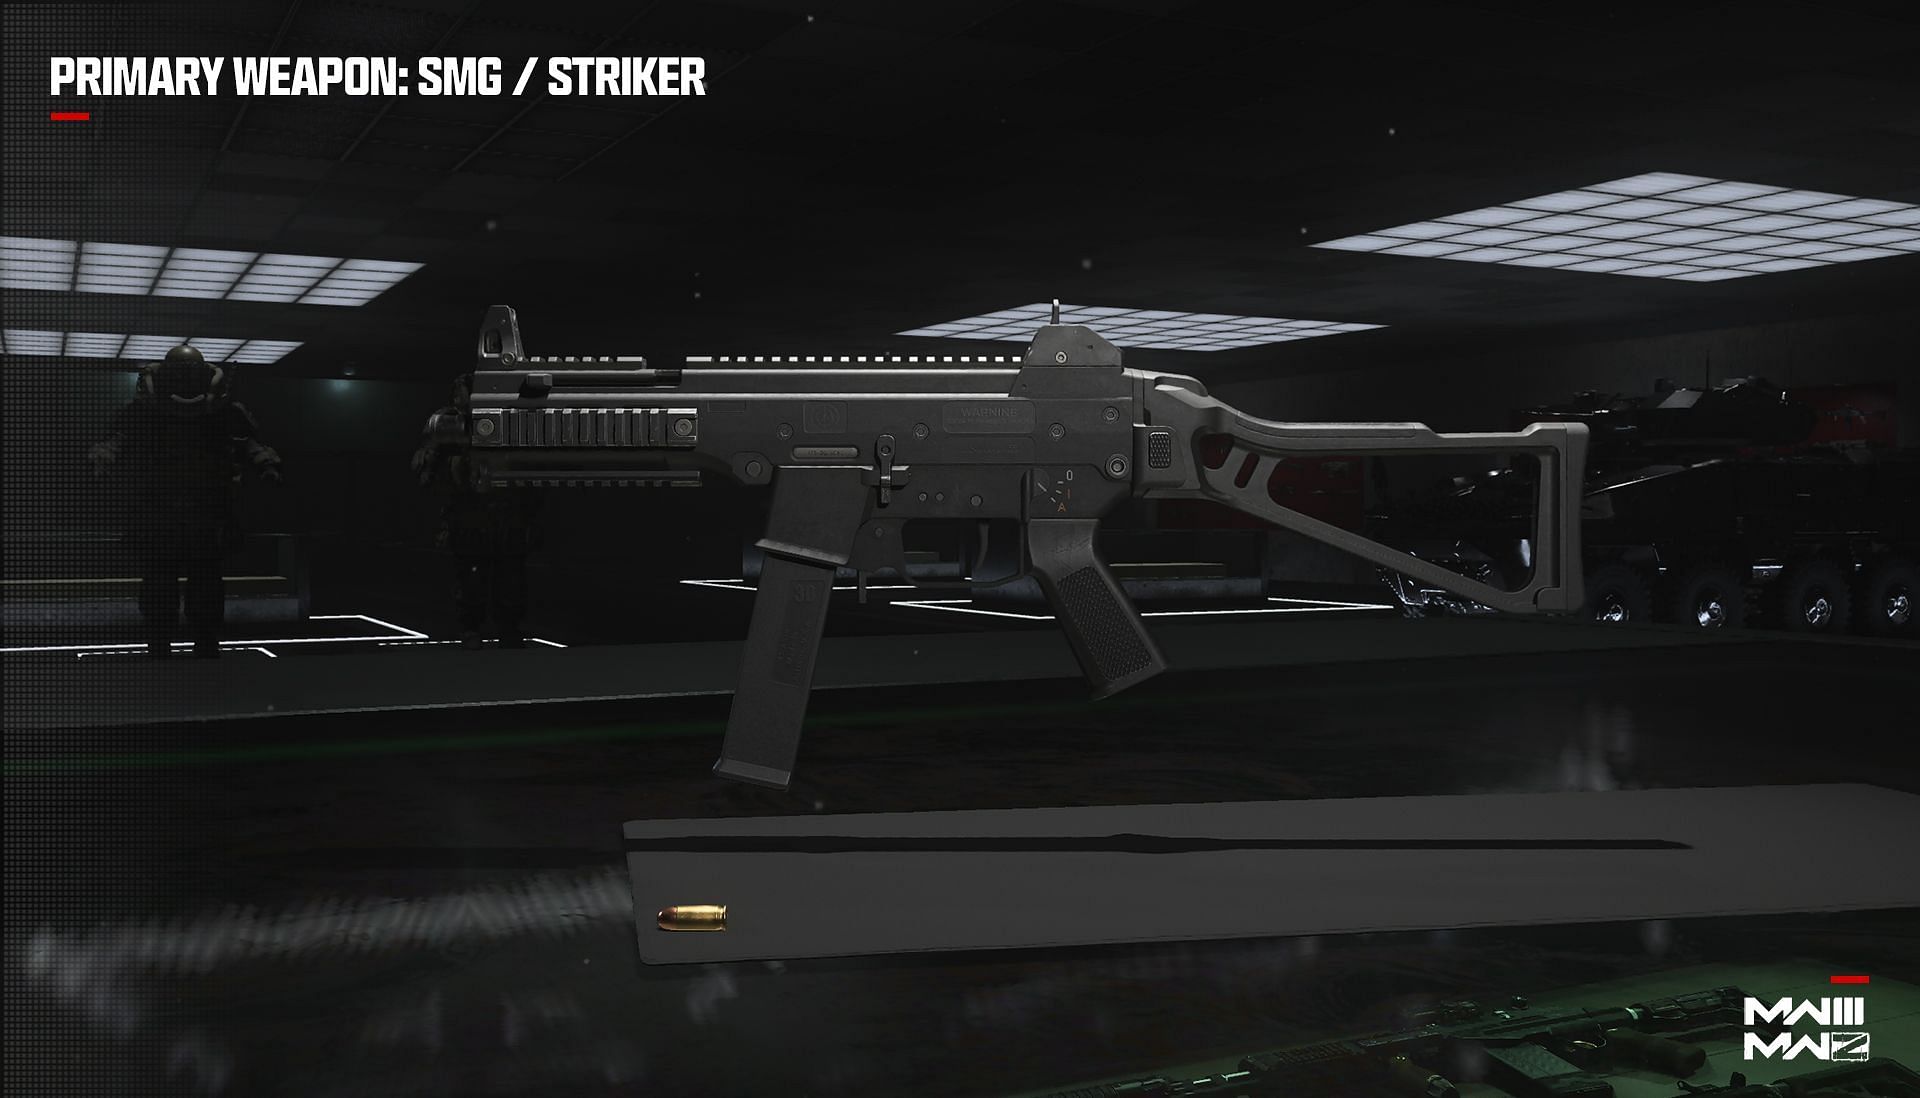 Striker SMG (Image via Activision)